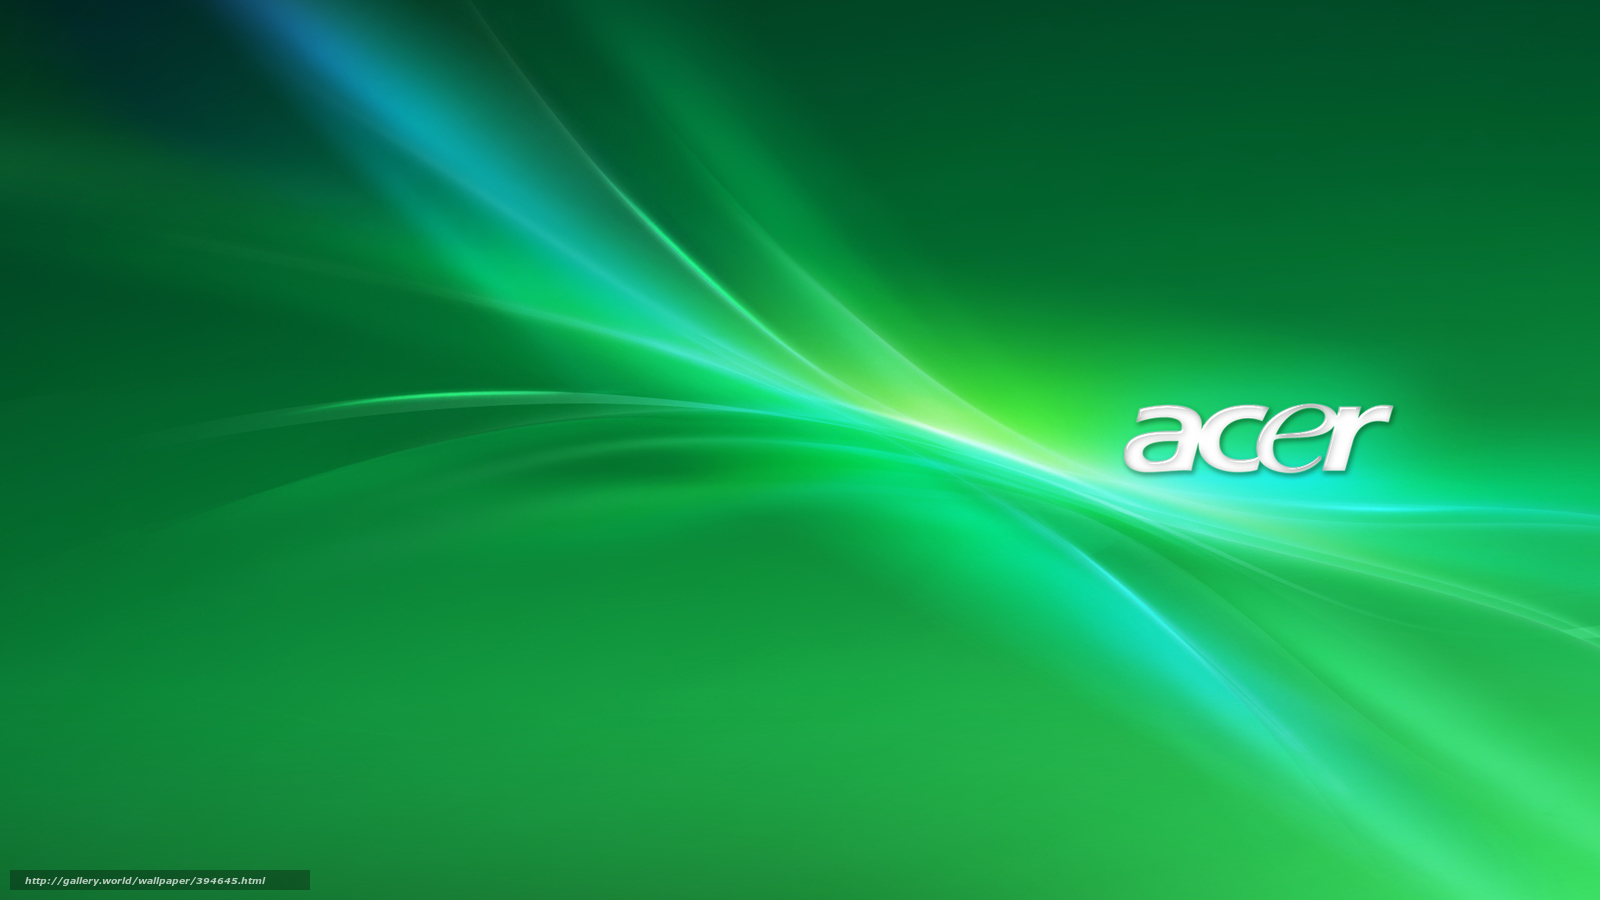 Download wallpaper Acer brand name wallpaper notebook free desktop